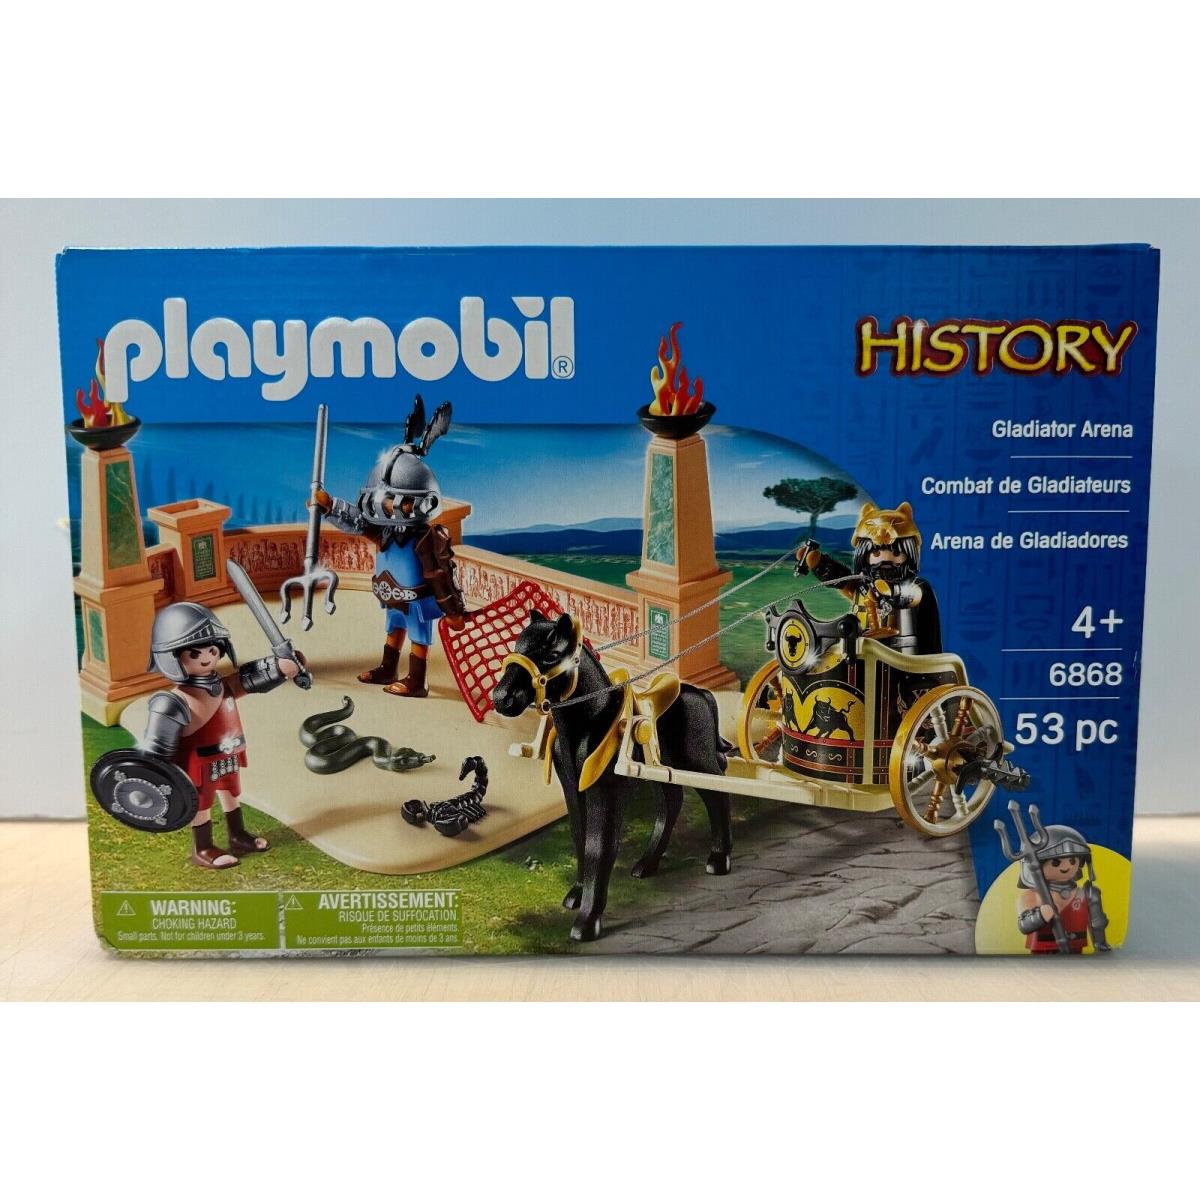 Playmobil 6868 Gladiator Arena History Figures Roman Chariot Horse